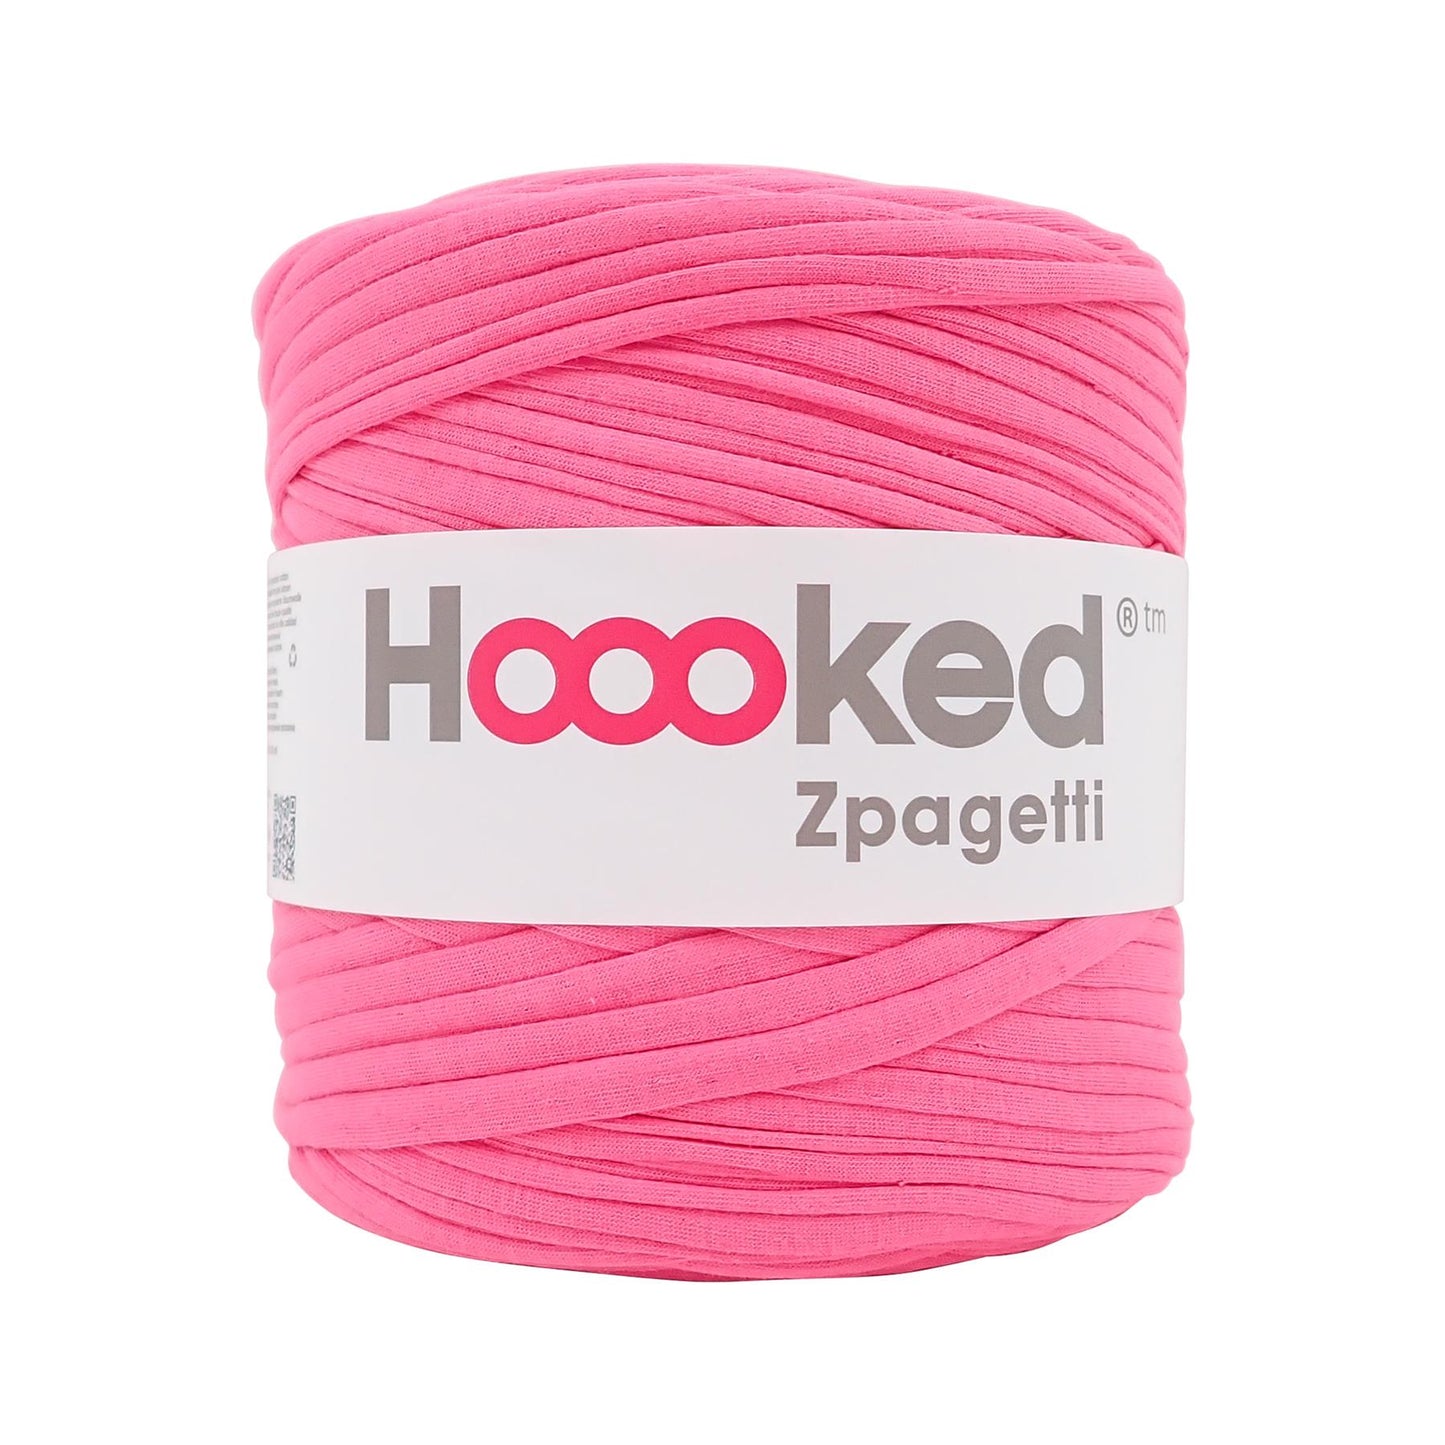 Hoooked Zpagetti Dark Pink Cotton T-Shirt Yarn - 120M 700g